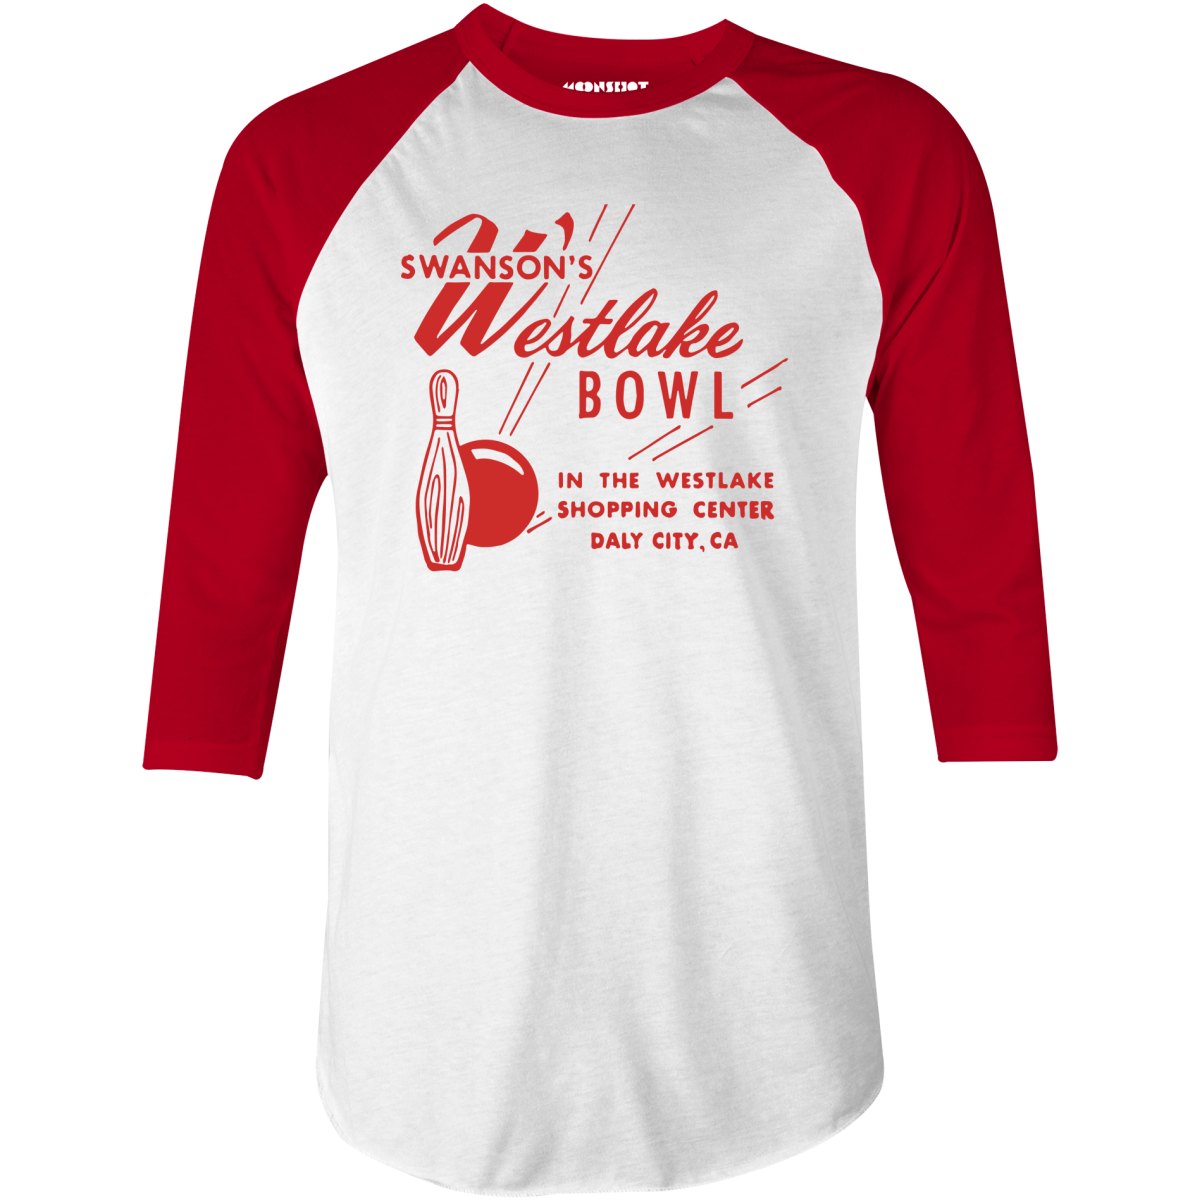 Swanson's Westlake Bowl - Daly City, CA - Vintage Bowling Alley - 3/4 Sleeve Raglan T-Shirt